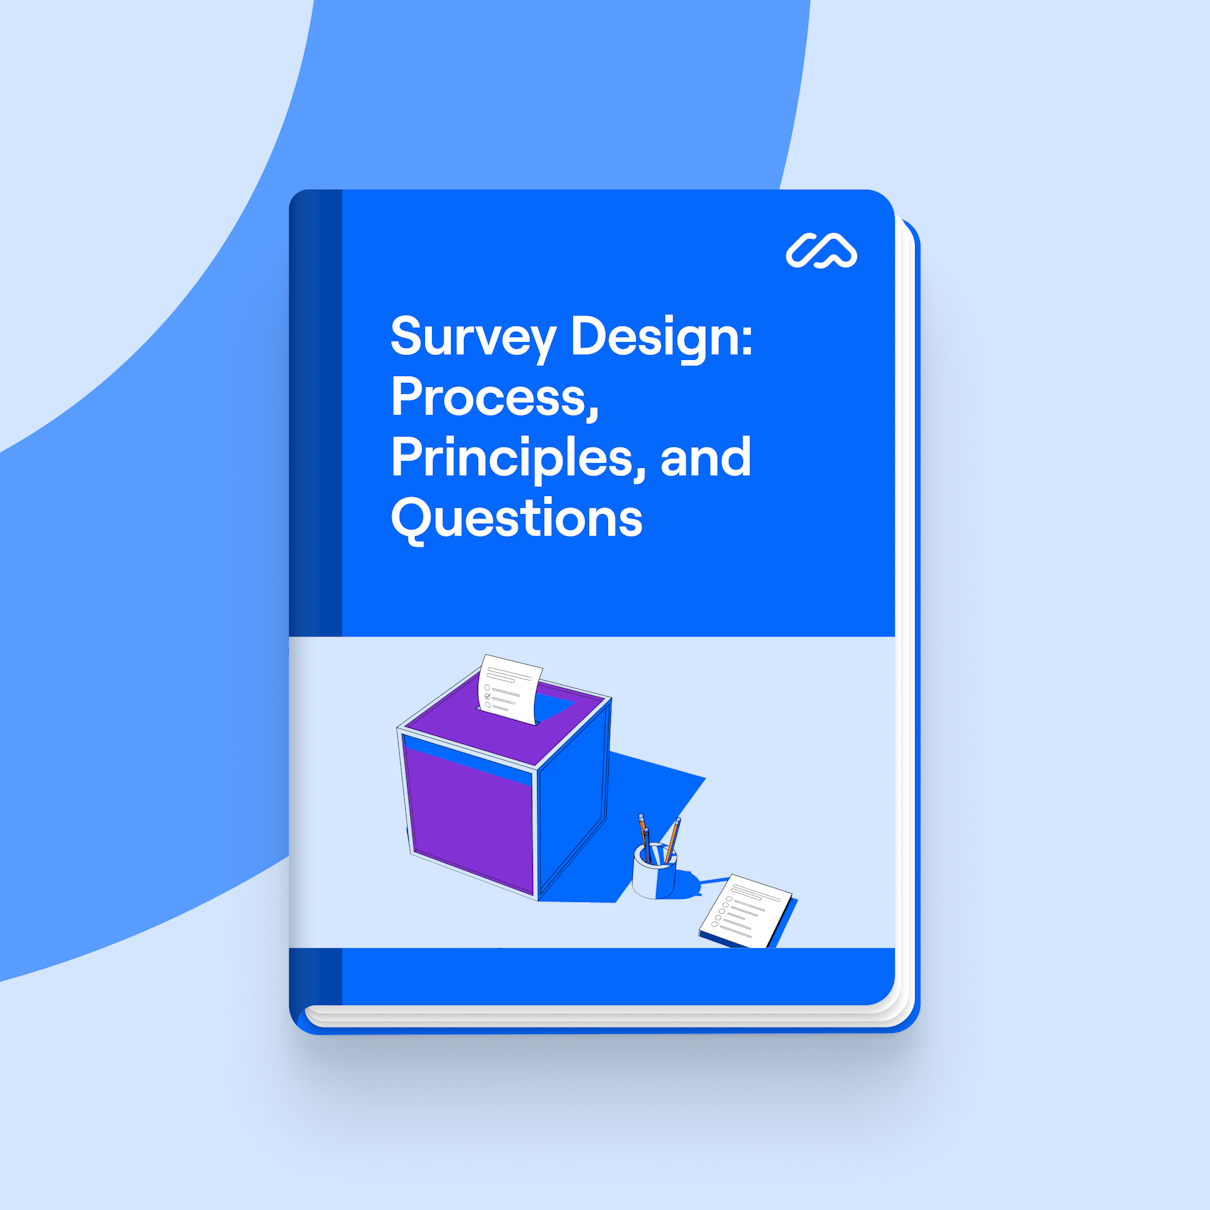 Survey Design: Process, Principles, and Questions